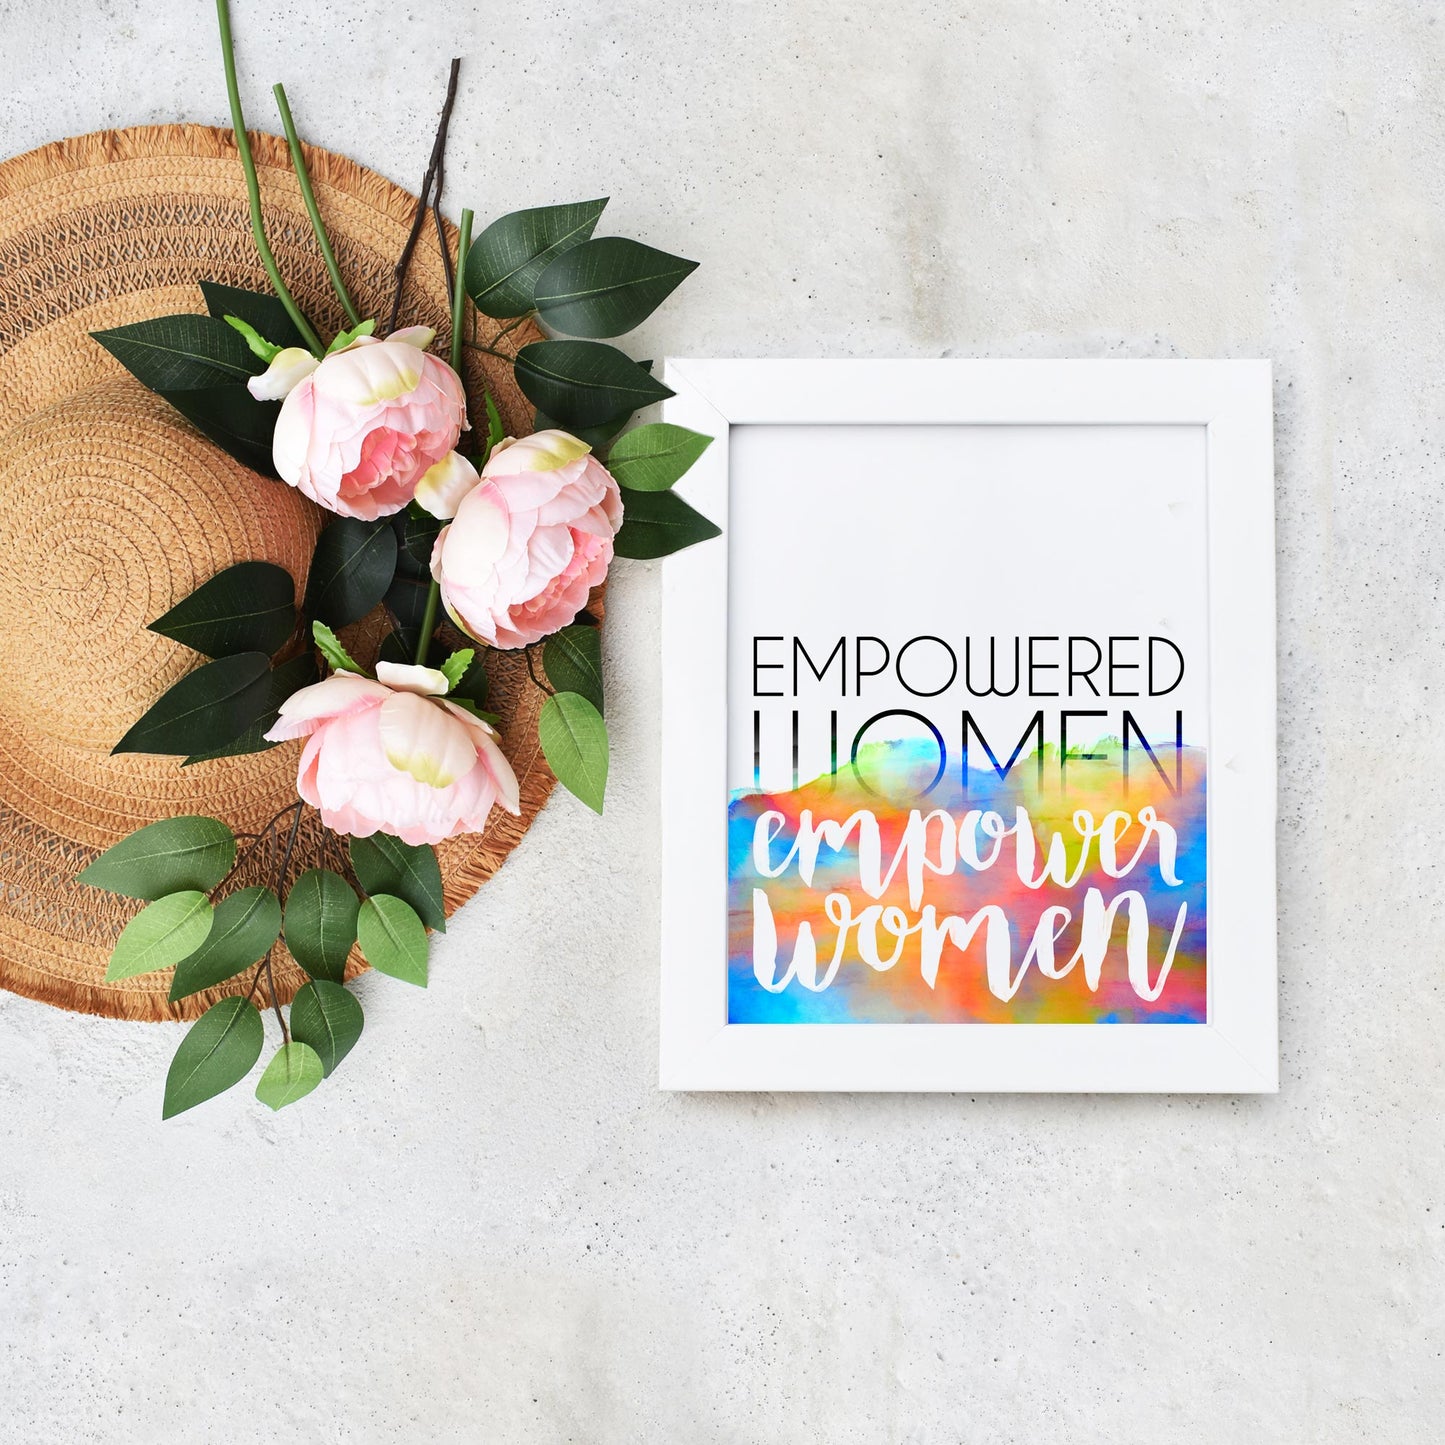 Empower Women Empower Women Printable by Playful Pixie Studio